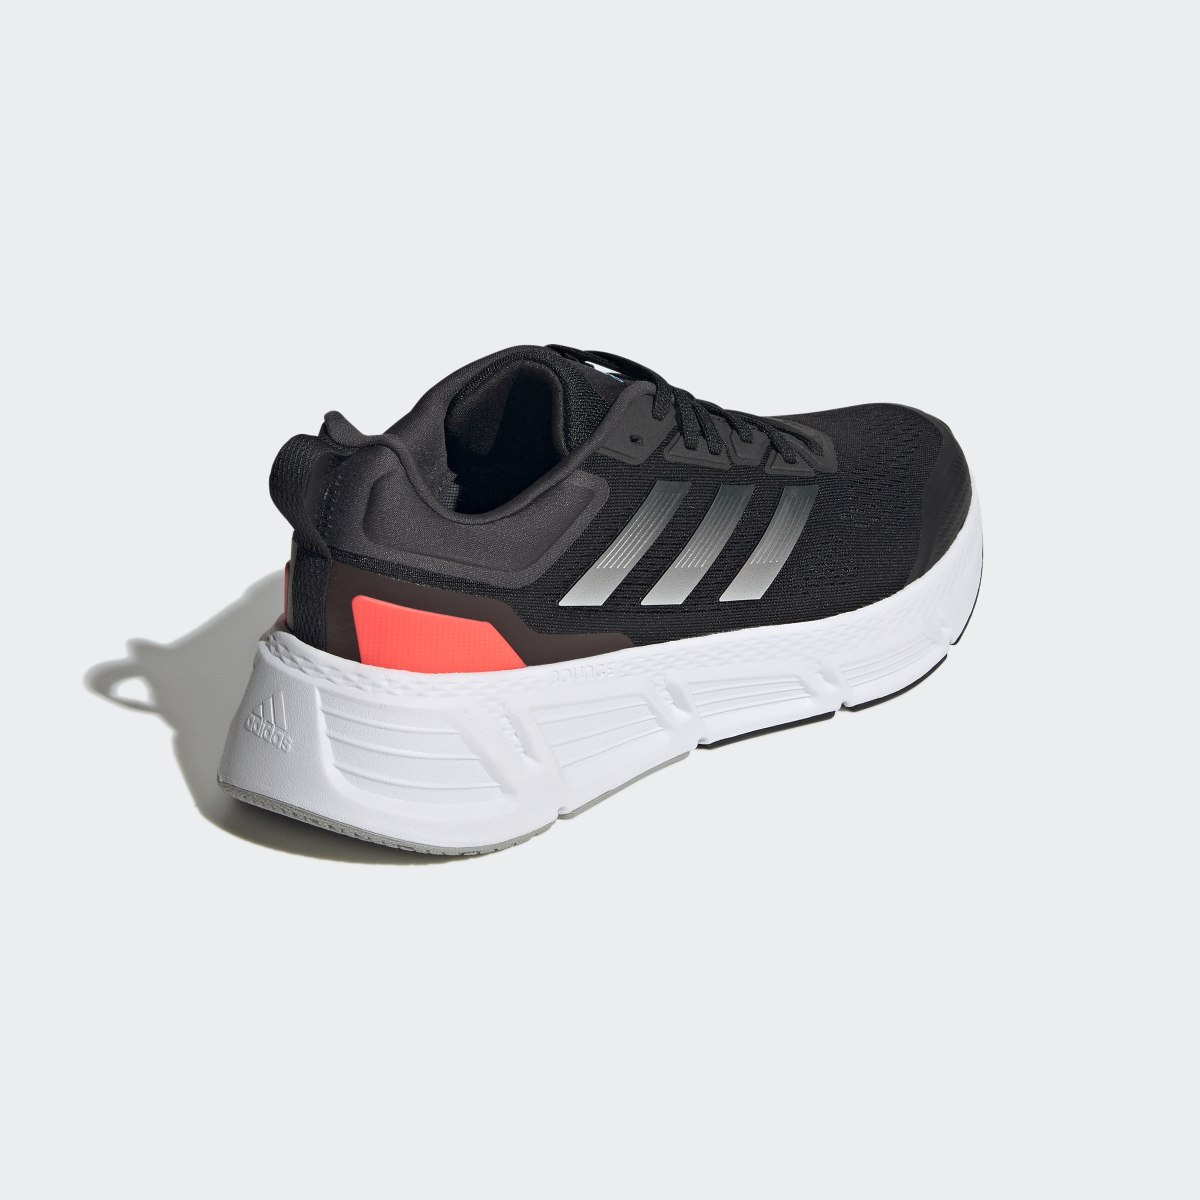 Adidas Questar Shoes. 6